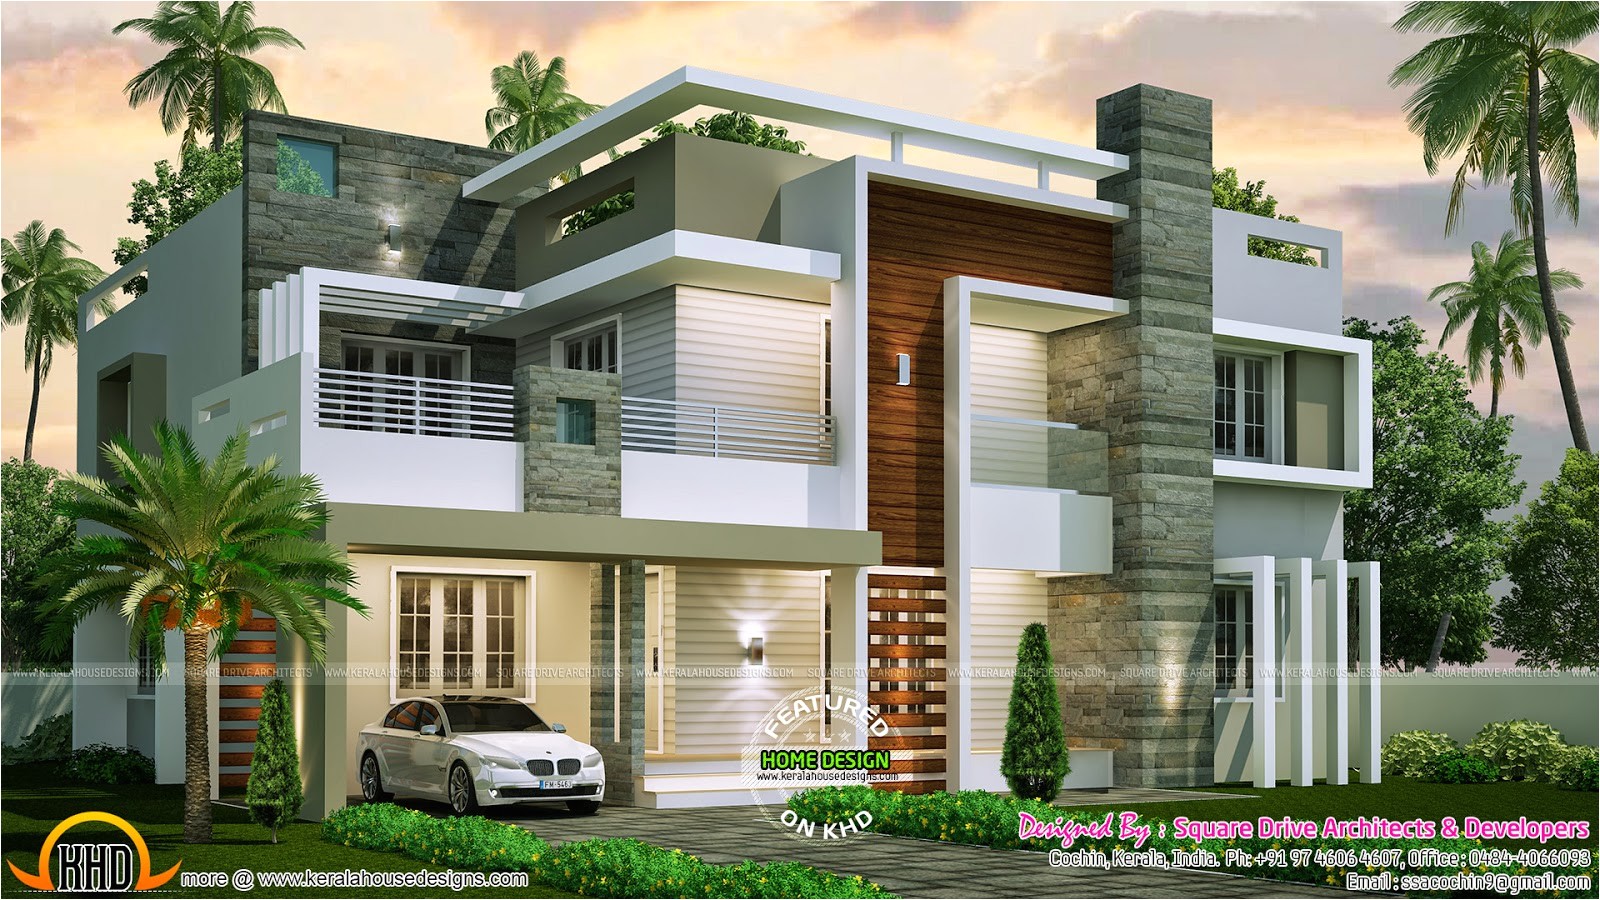 Contemporary Style Home Plans 4 Bedroom Contemporary Home Design Kerala Home Design